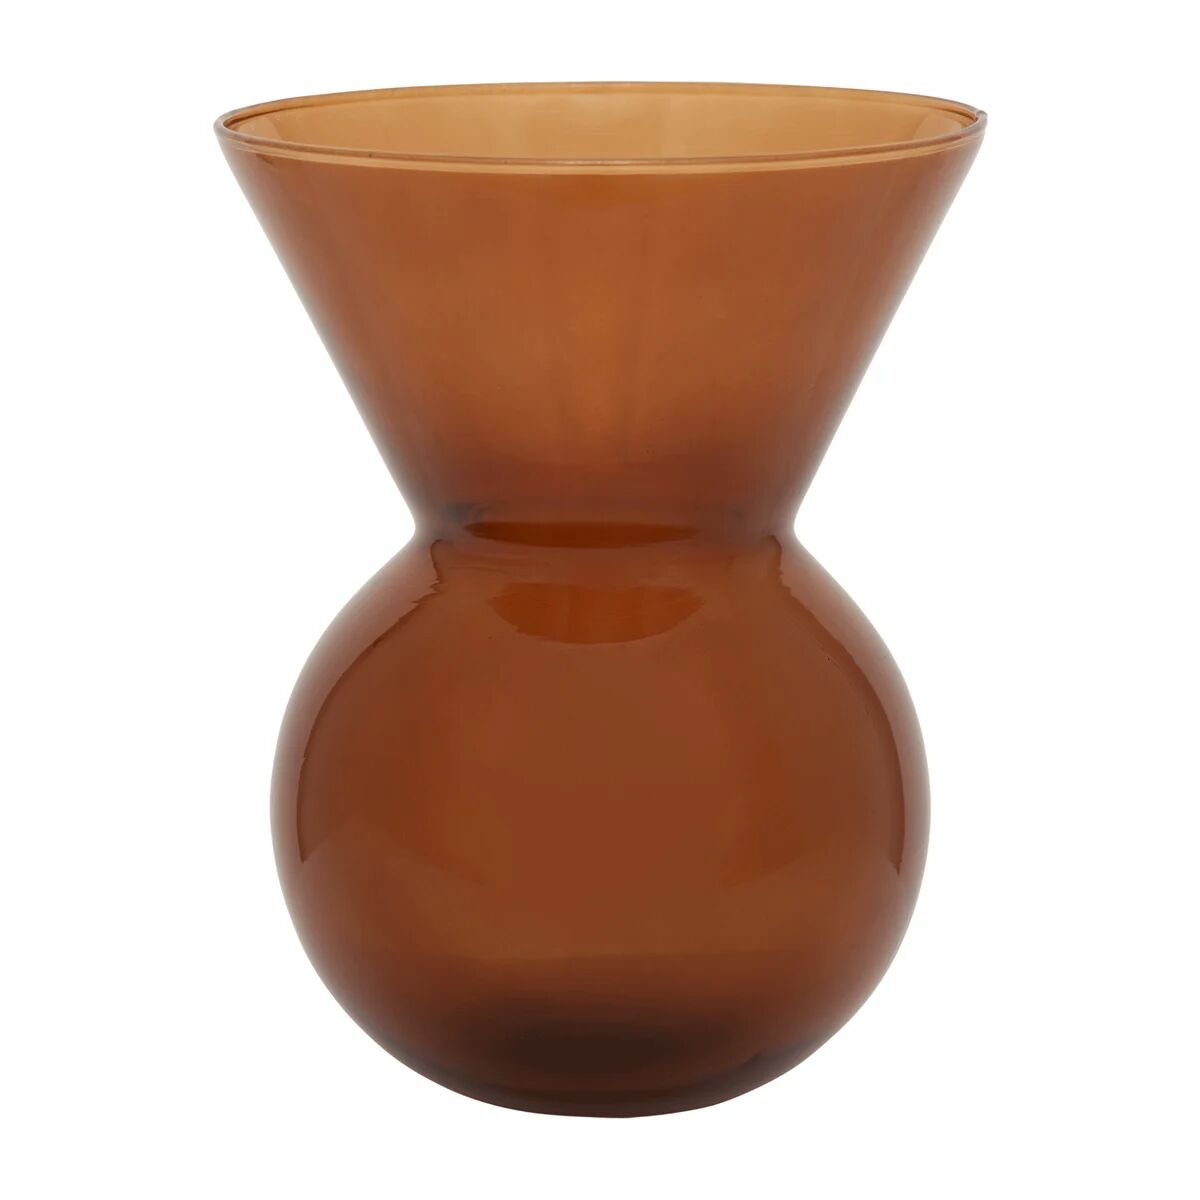 URBAN NATURE CULTURE By Mieke Cuppen vase 15 cm Arabian spice